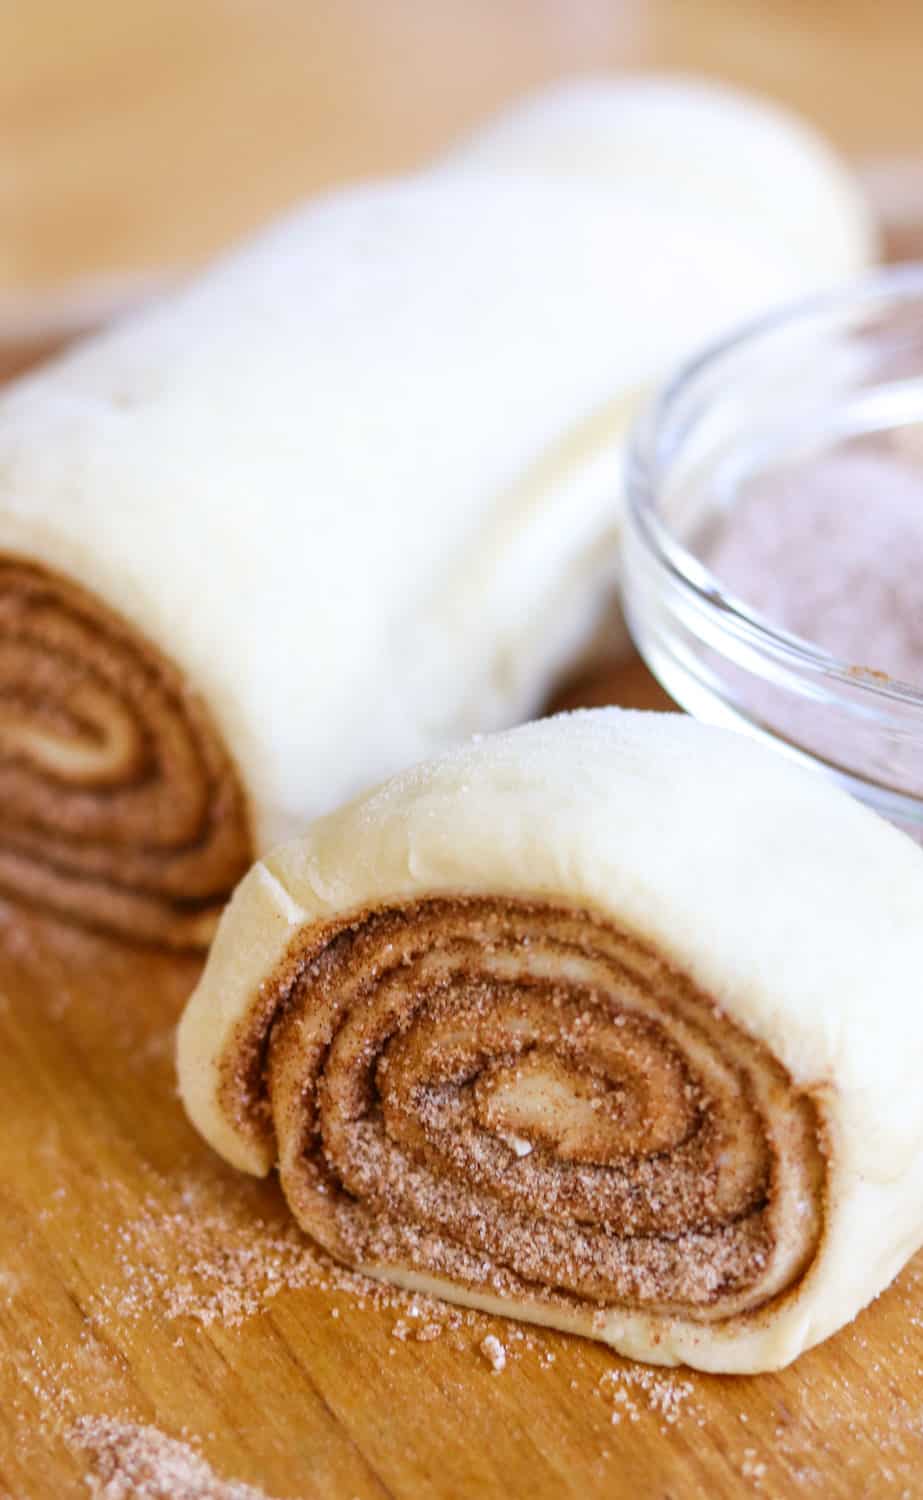 Rolls of dough with cinnamon sugar inside.